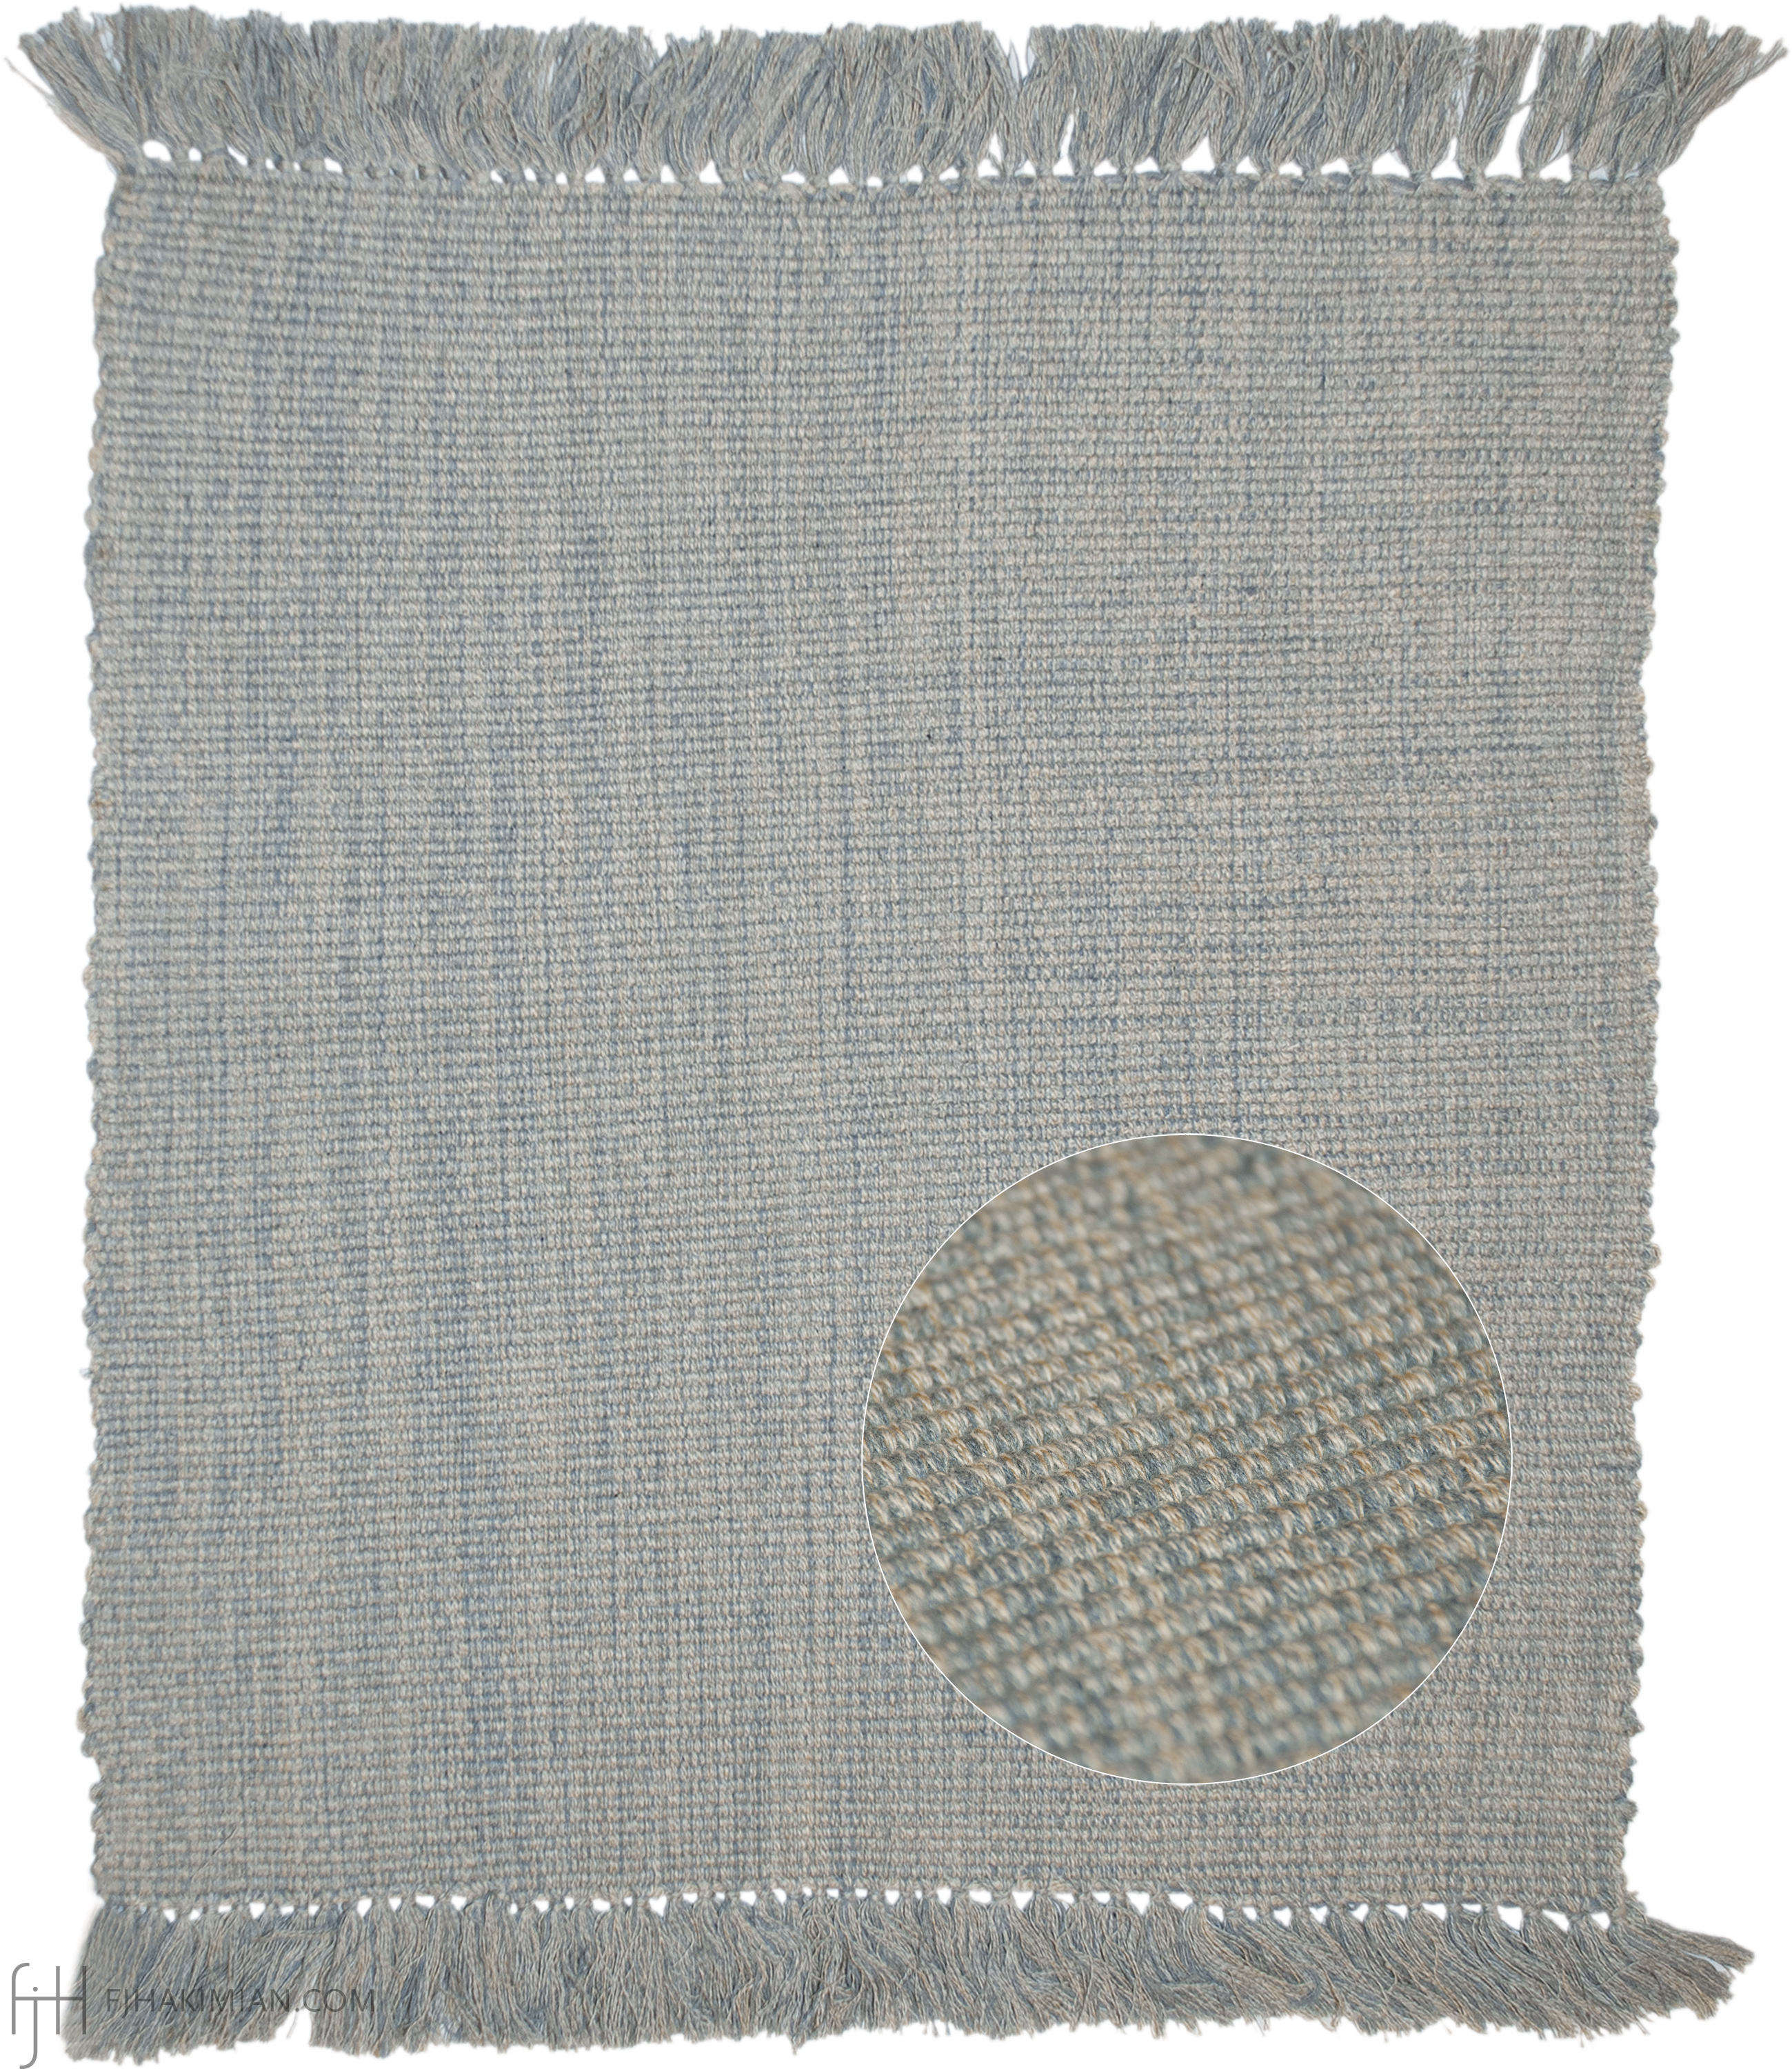 WY-HME03 | Custom South American Carpet | FJ Hakimian | Carpet Gallery in NYC